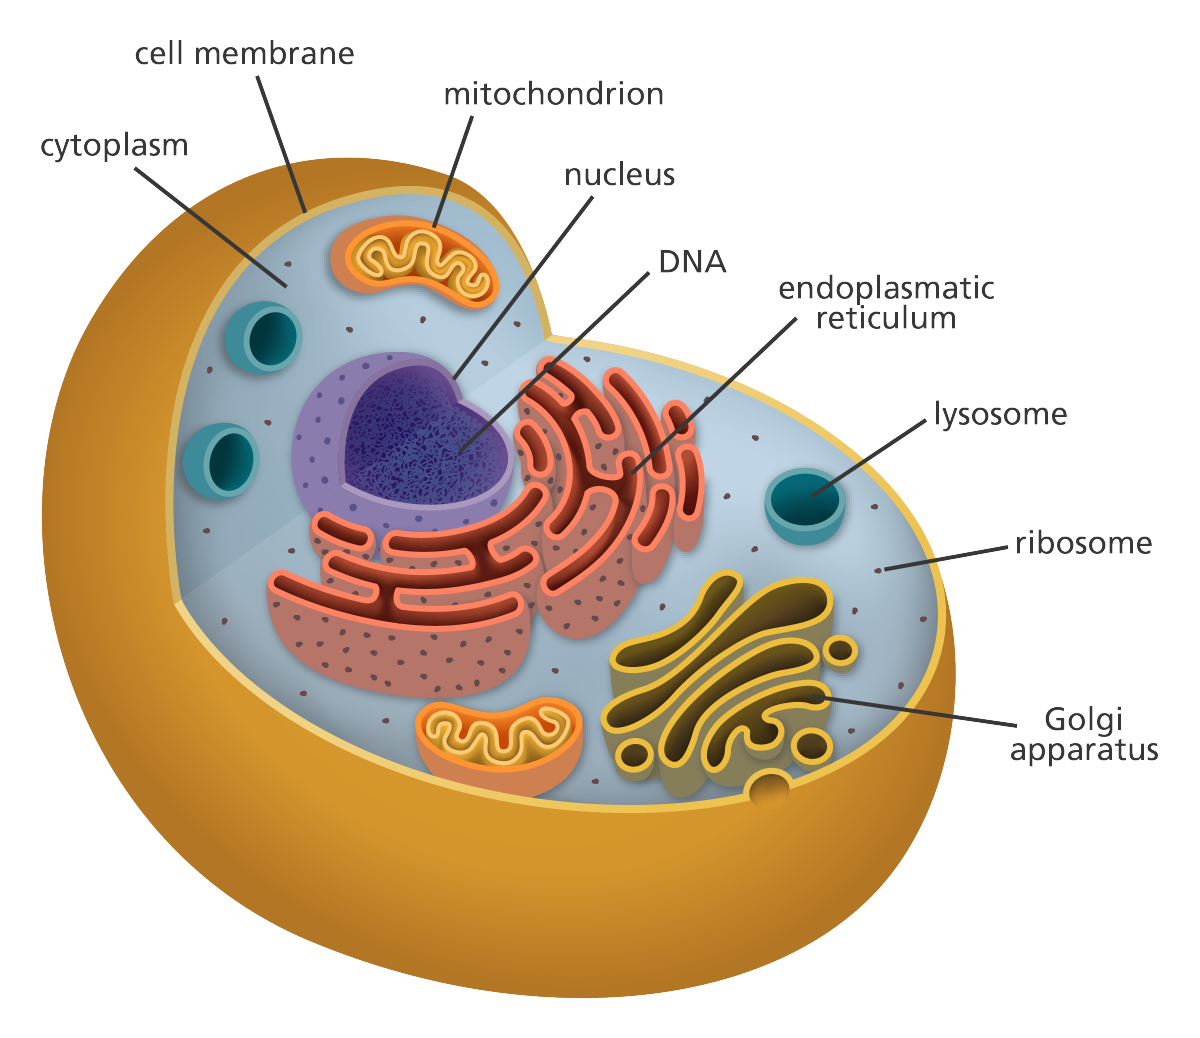 Клетка человека изображение. Человеческая клетка. Клетка человека рисунок. Клетка цитология. Cell structure.